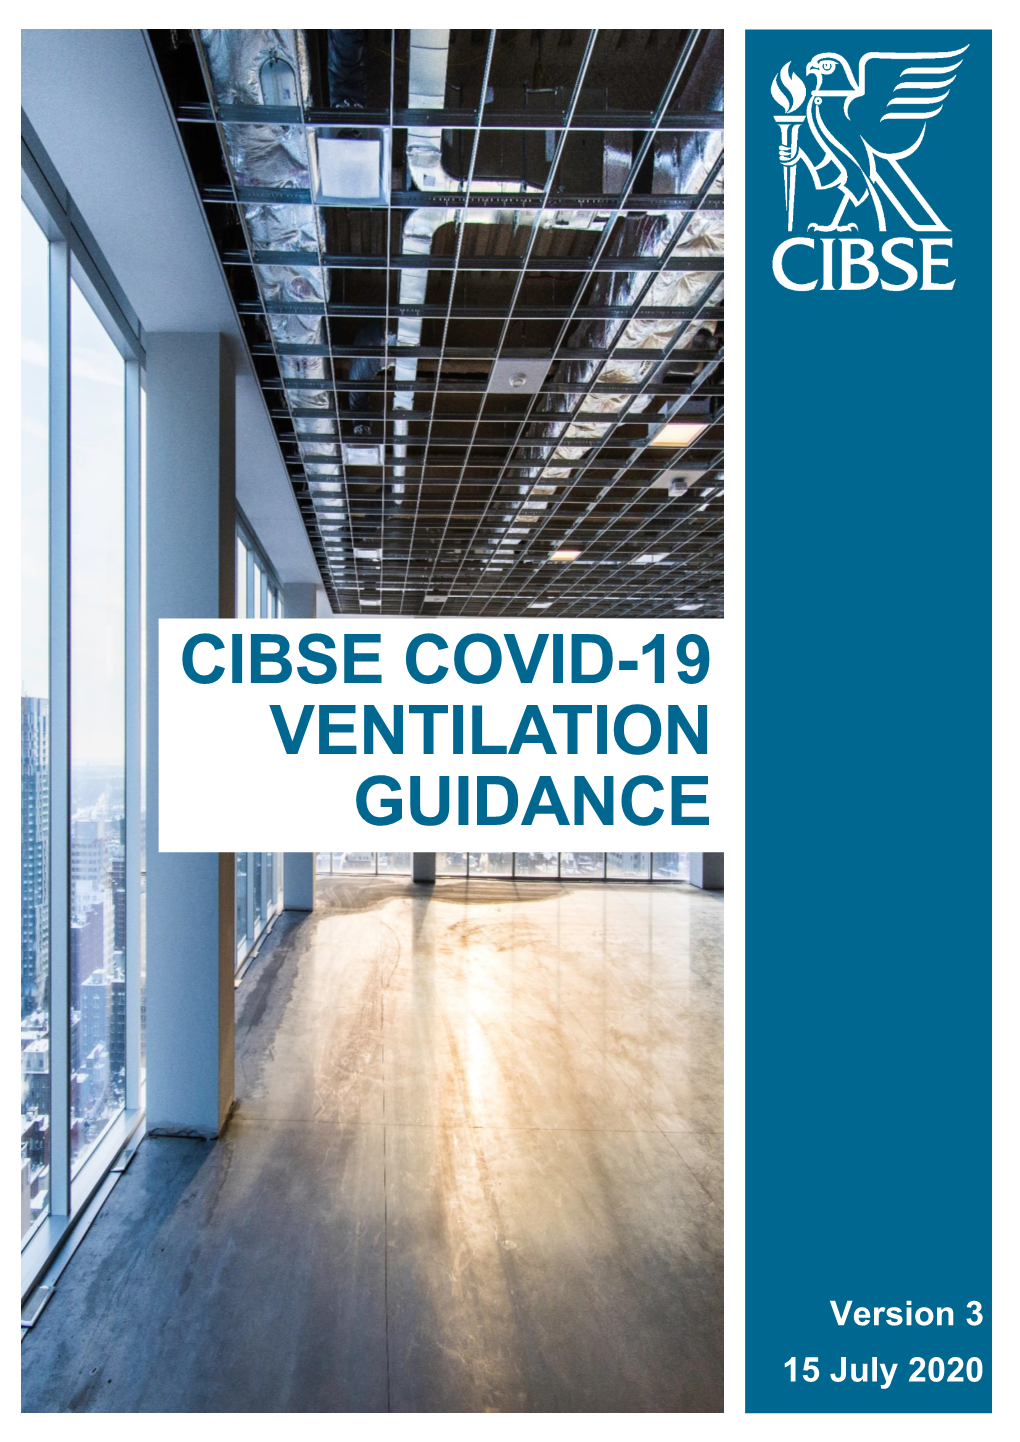 Cibse Covid-19 Ventilation Guidance